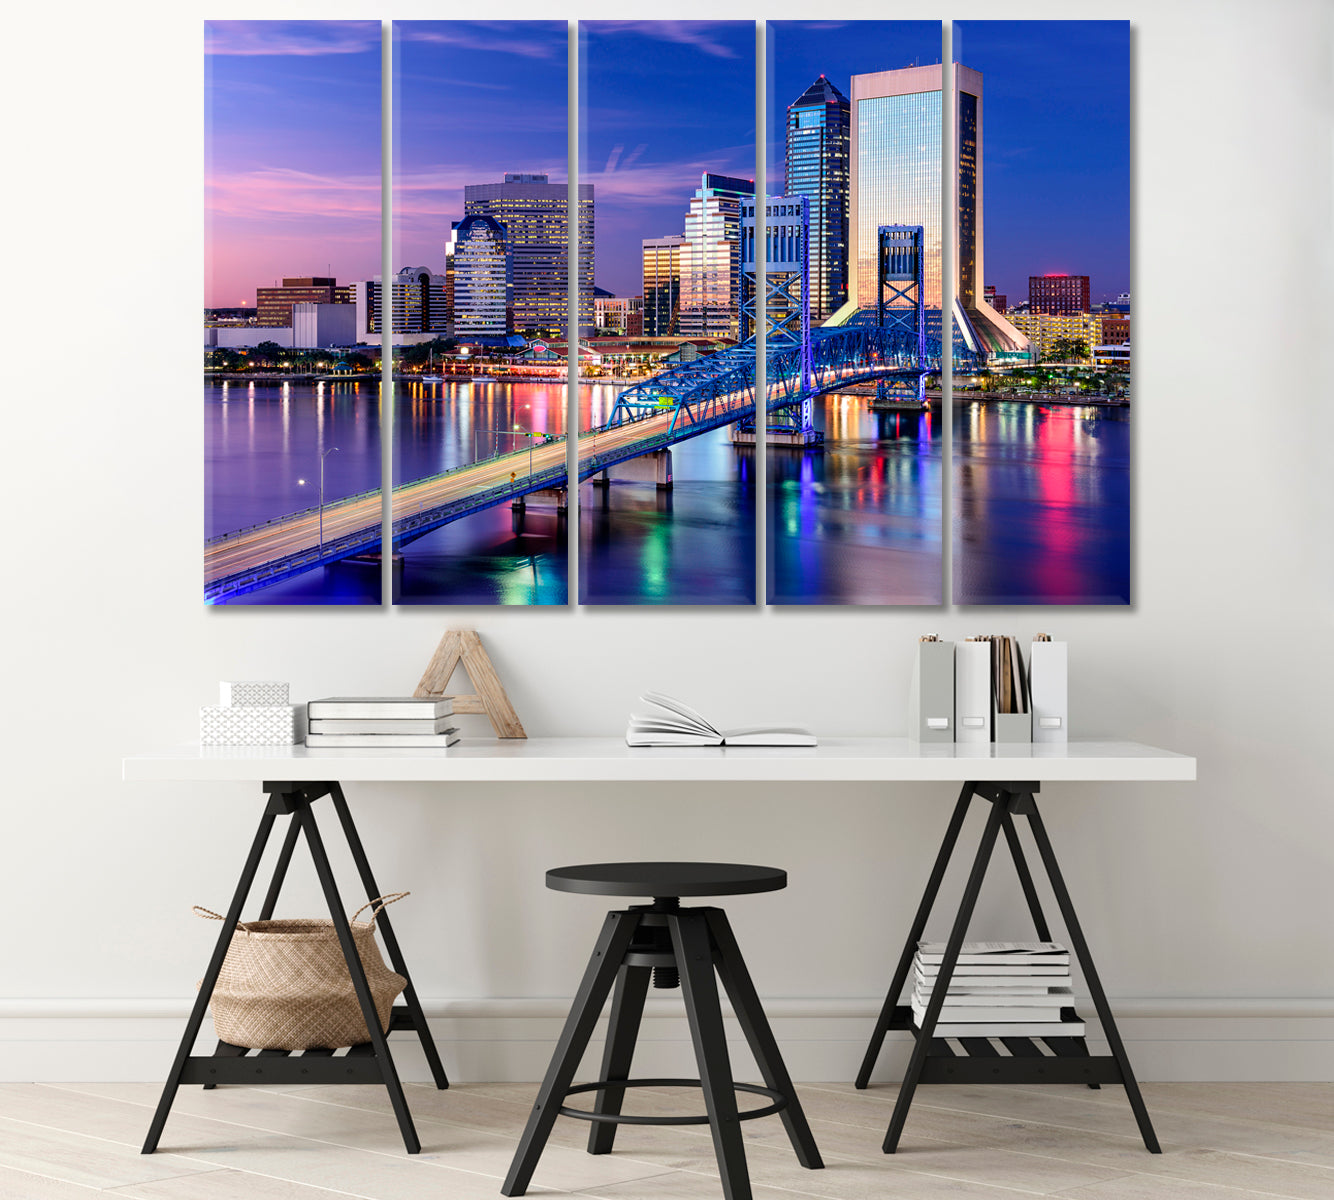 Сity Jacksonville near the St Johns River Canvas Print-Canvas Print-CetArt-1 Panel-24x16 inches-CetArt